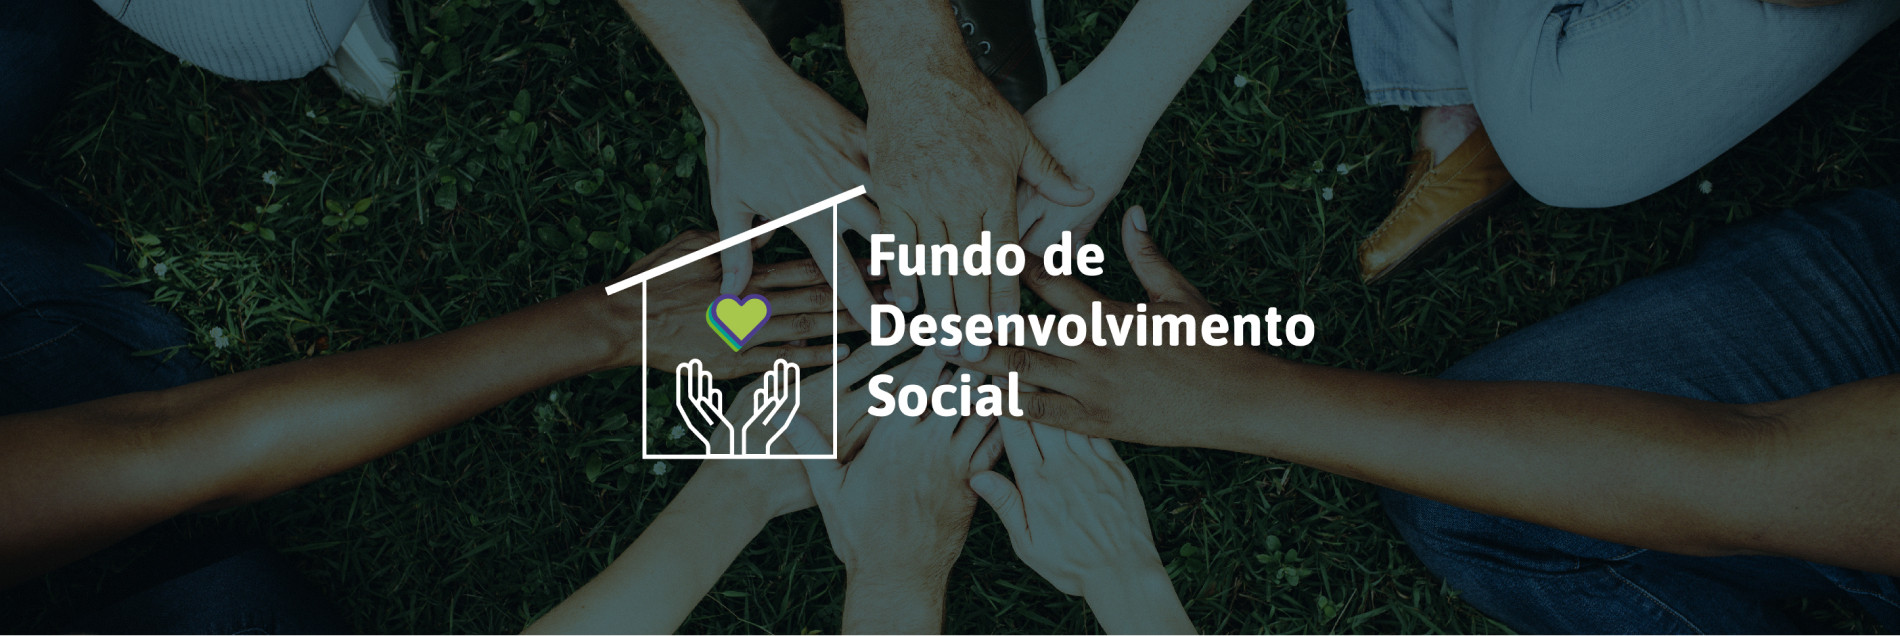 Fundo de Desenvolvimento Social